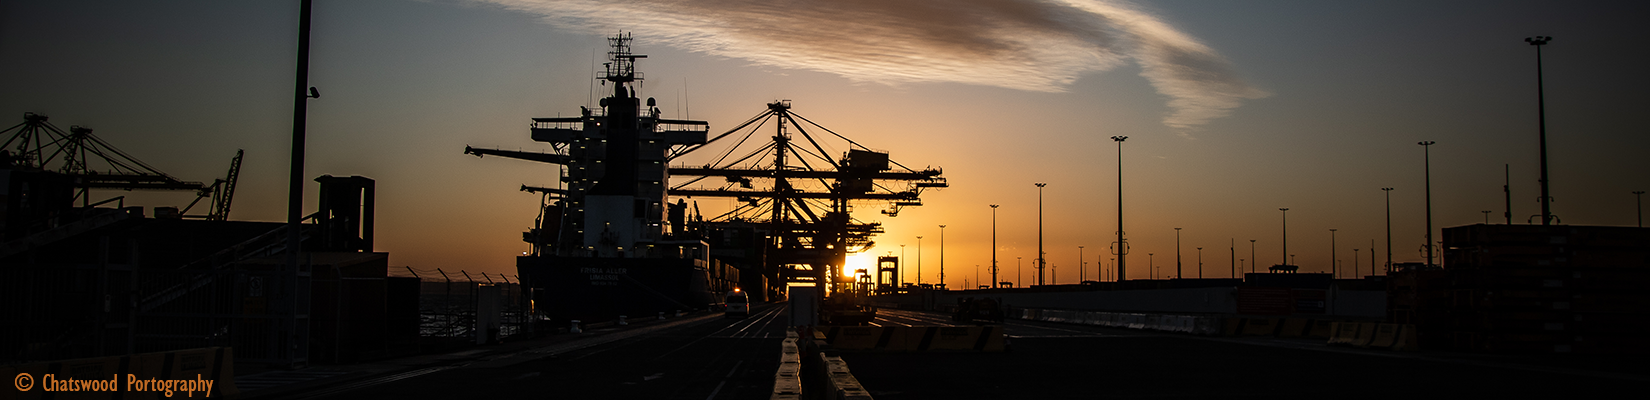 New Port Welfare Committees Responding to Seafarer Needs